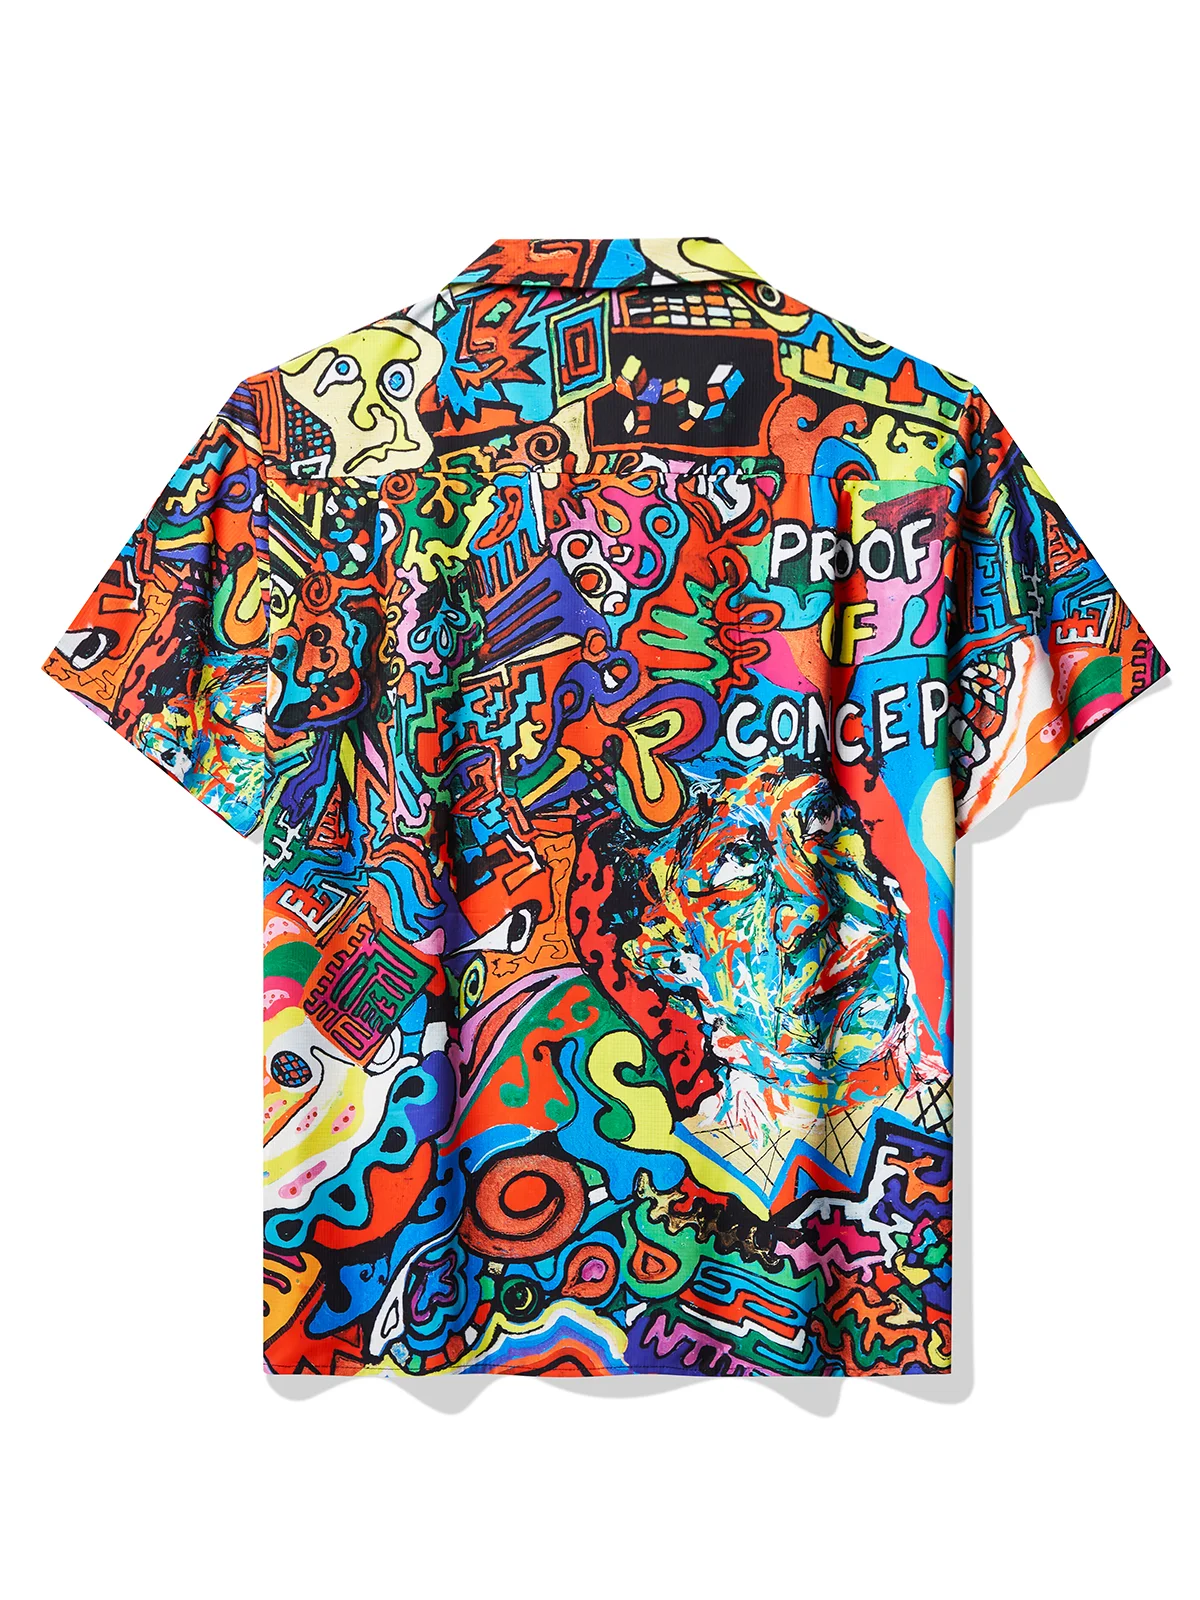 Royaura® x David Henry Lombardi Proof Of Concept Abstract Graffiti Art Hawaiian Shirt Oversize